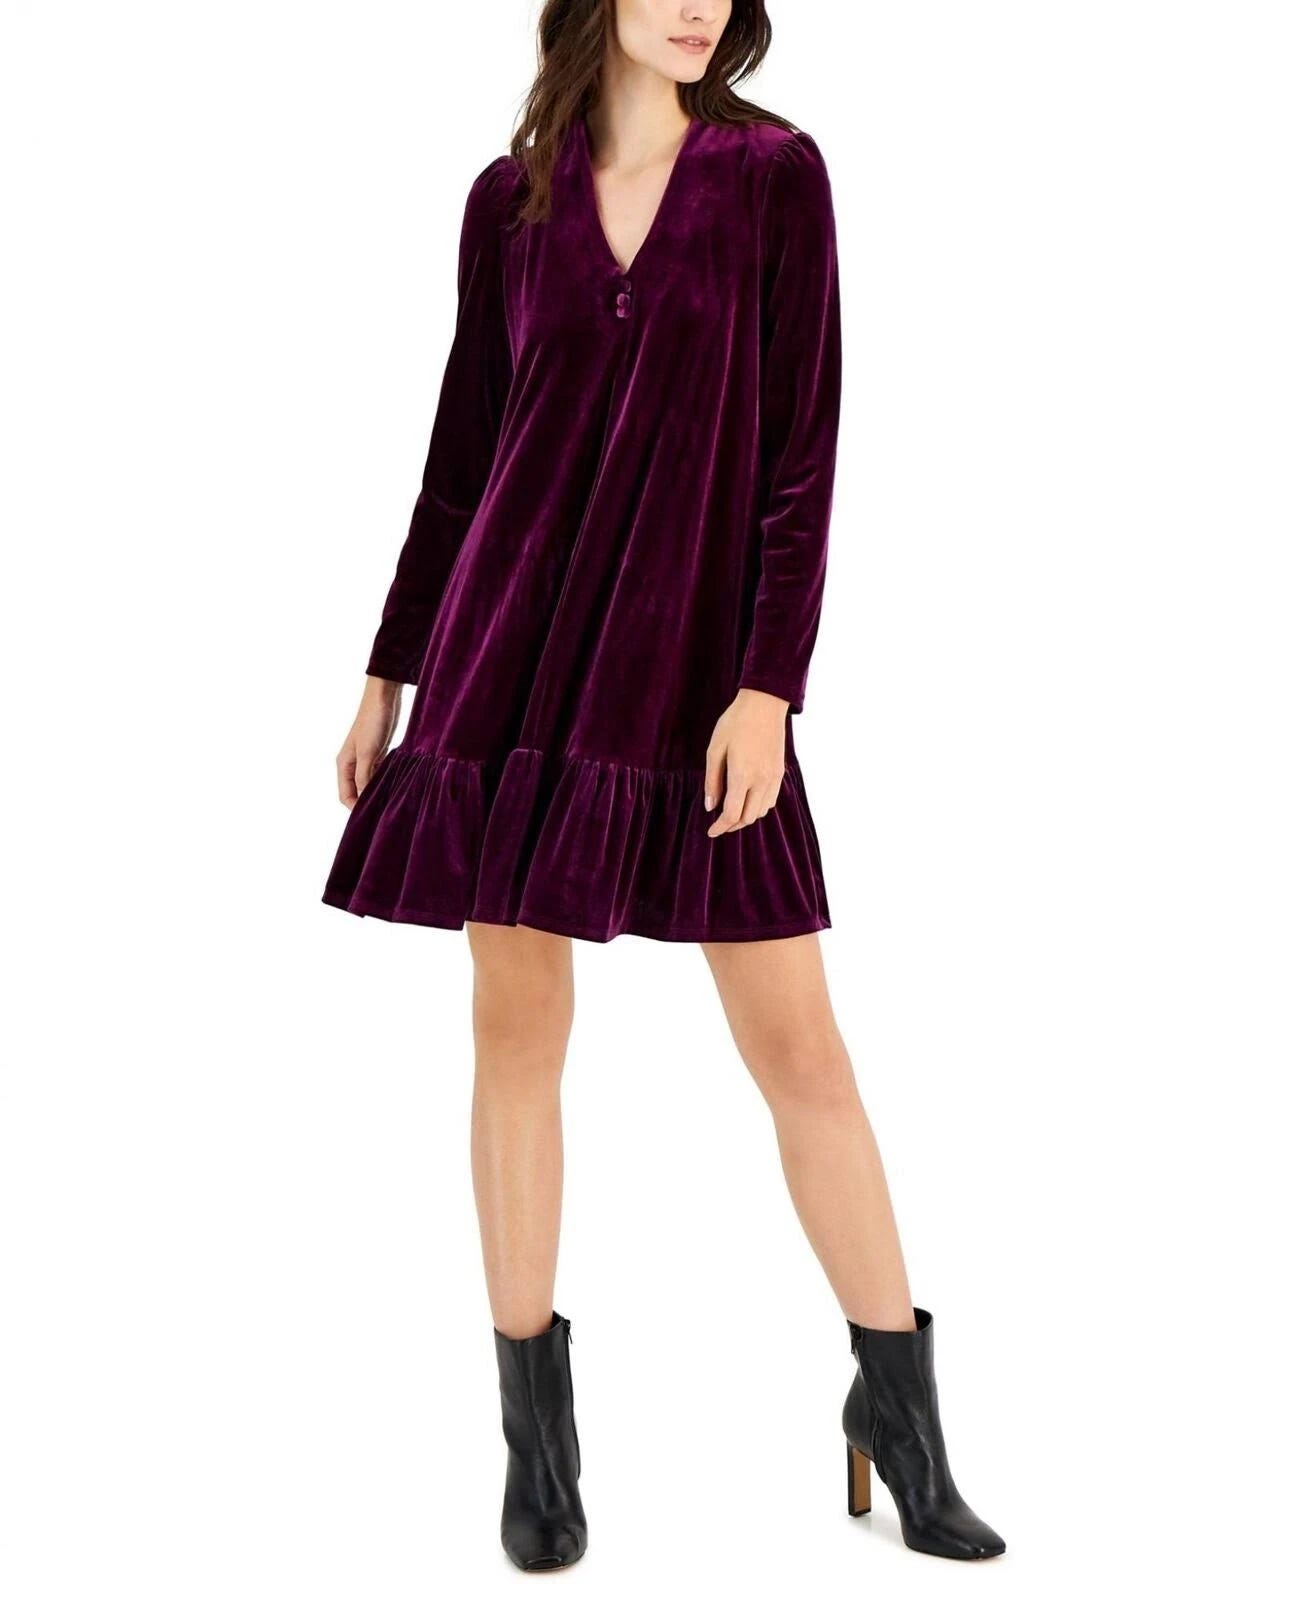 Luxury Velvet Shift Dress with V-Neck and Long Sleeves | Image